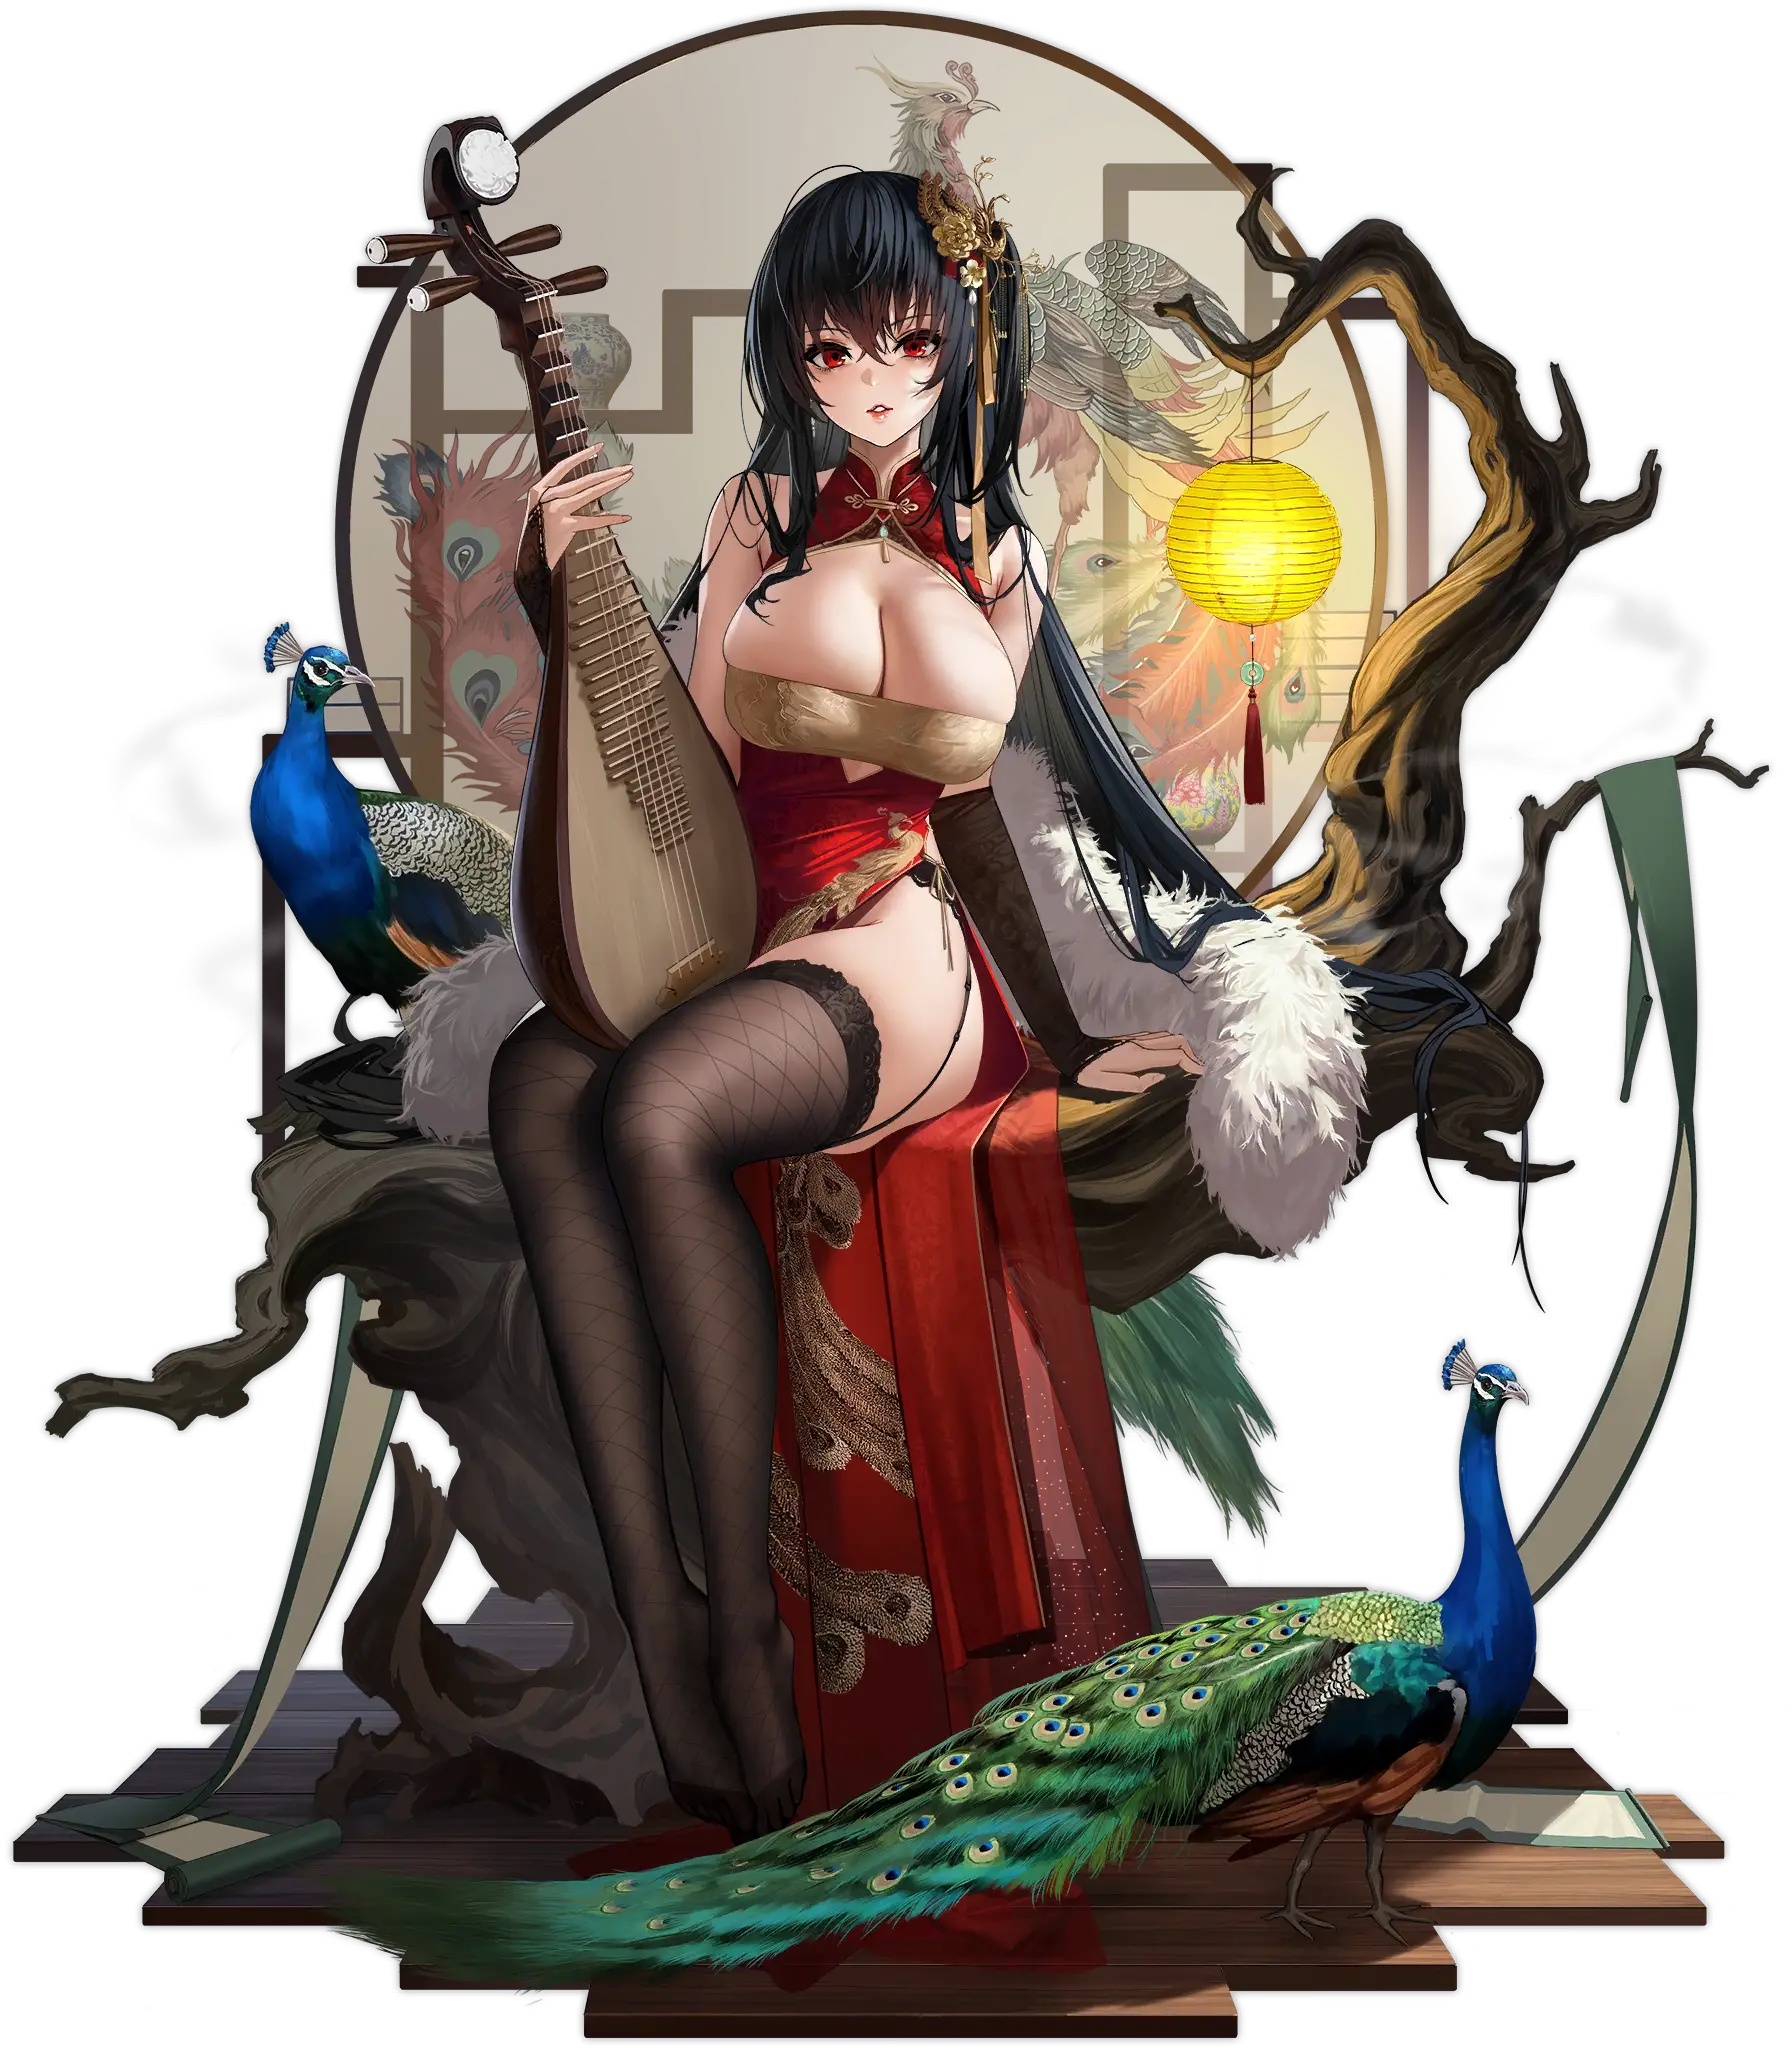 Taihou du jeu Azur Lane dans son skin Phoenix's Spring Song, illustration par Yunsang.